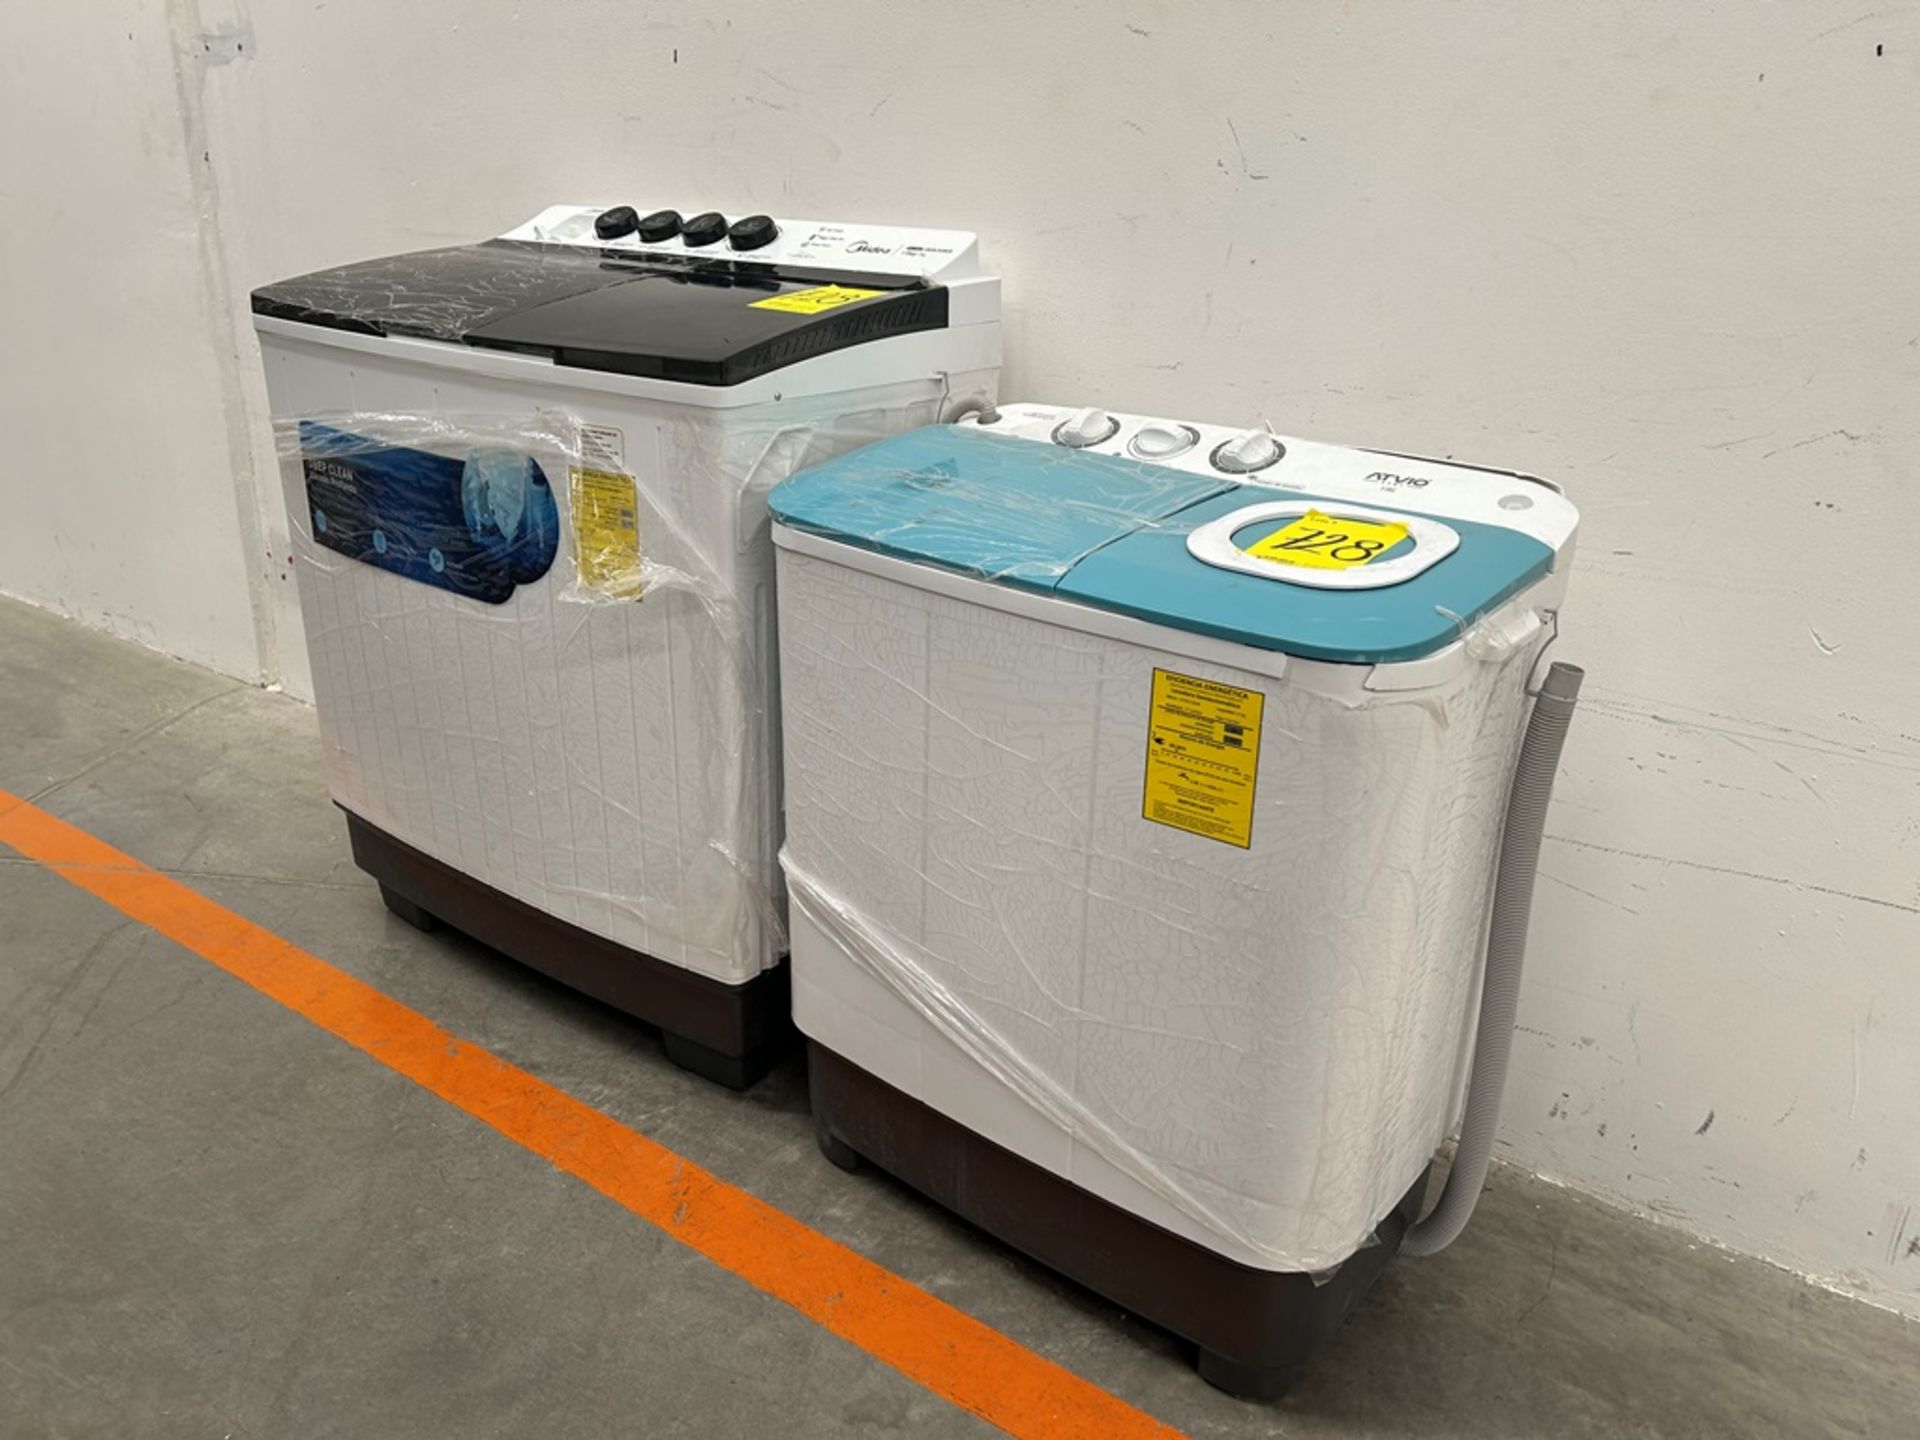 Lote de 2 lavadoras contiene: 1 Lavadora de 19 KG, Marca MIDEA, Modelo MT100W190WMX, Serie 500964, - Image 2 of 11